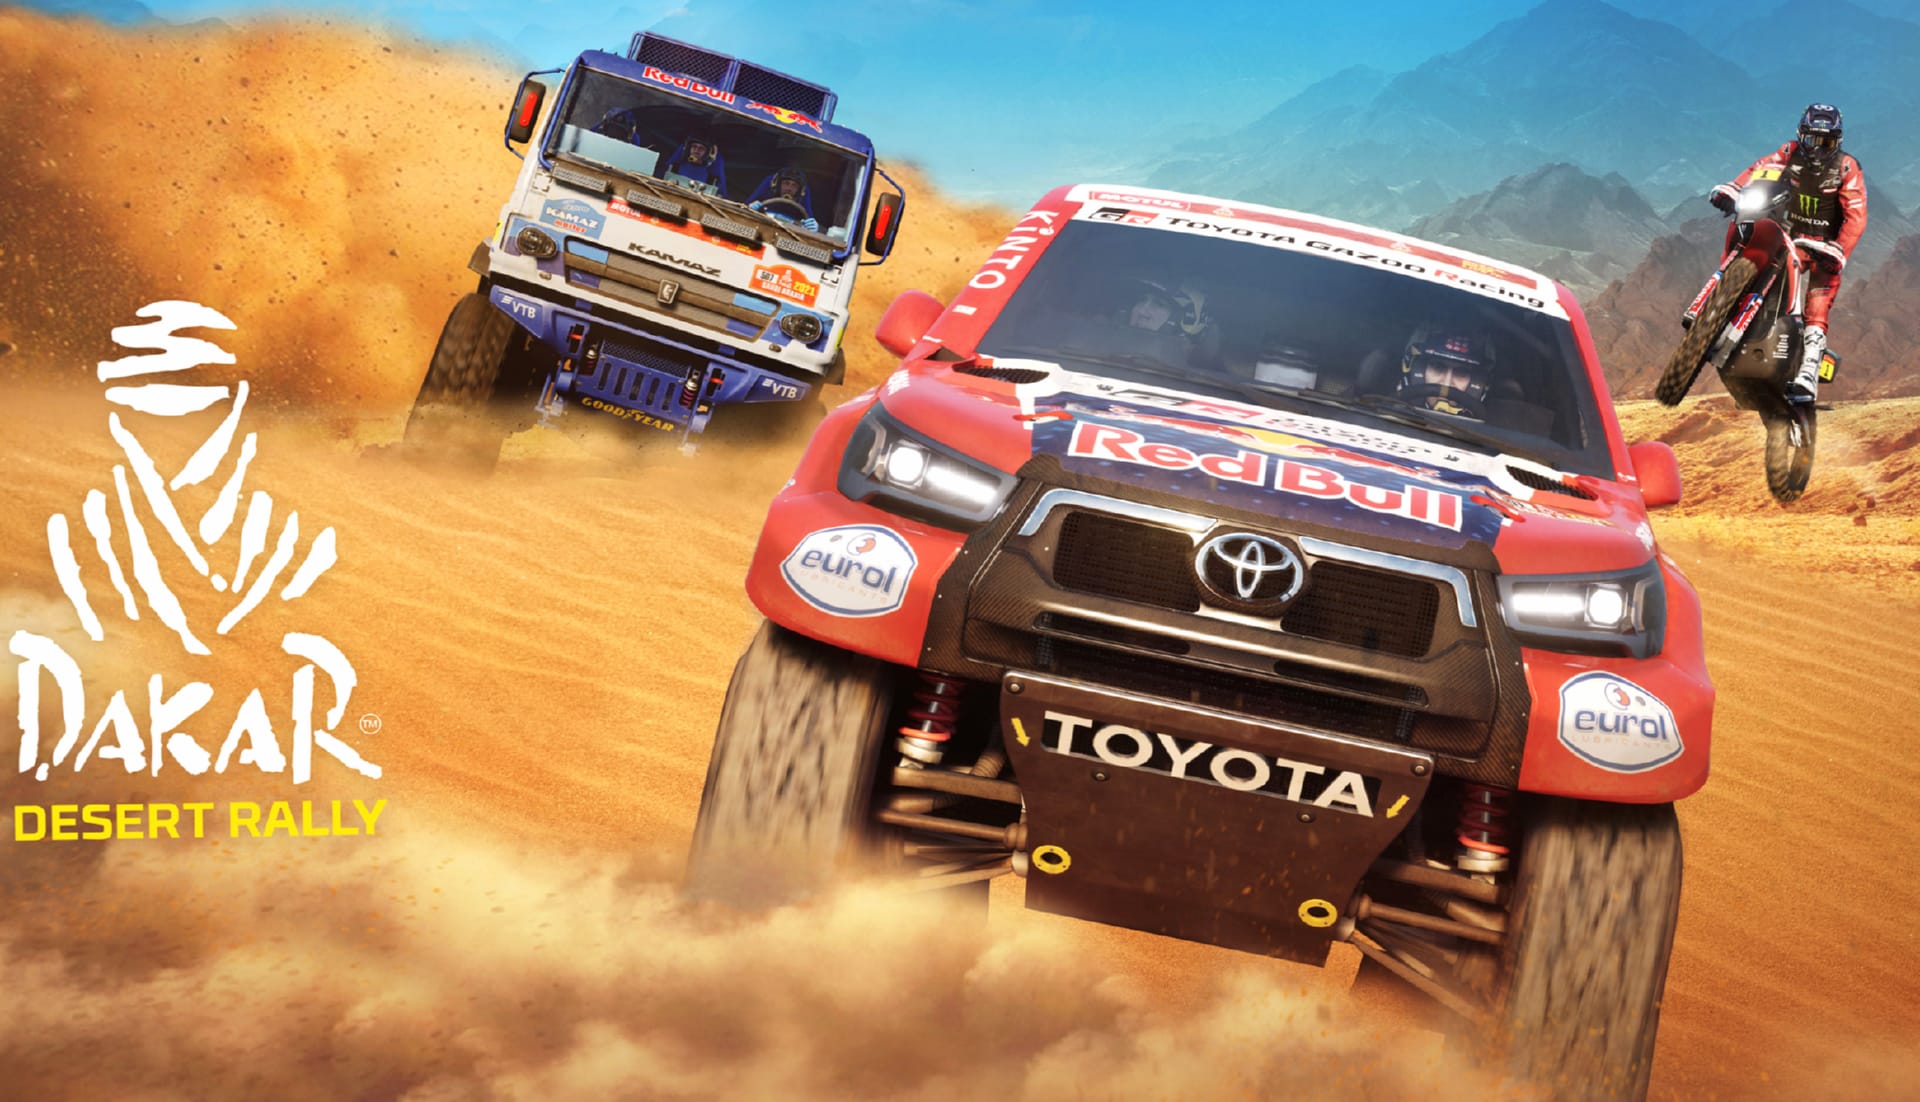 Dakar Desert Rally at 1024 x 1024 iPad size wallpapers HD quality